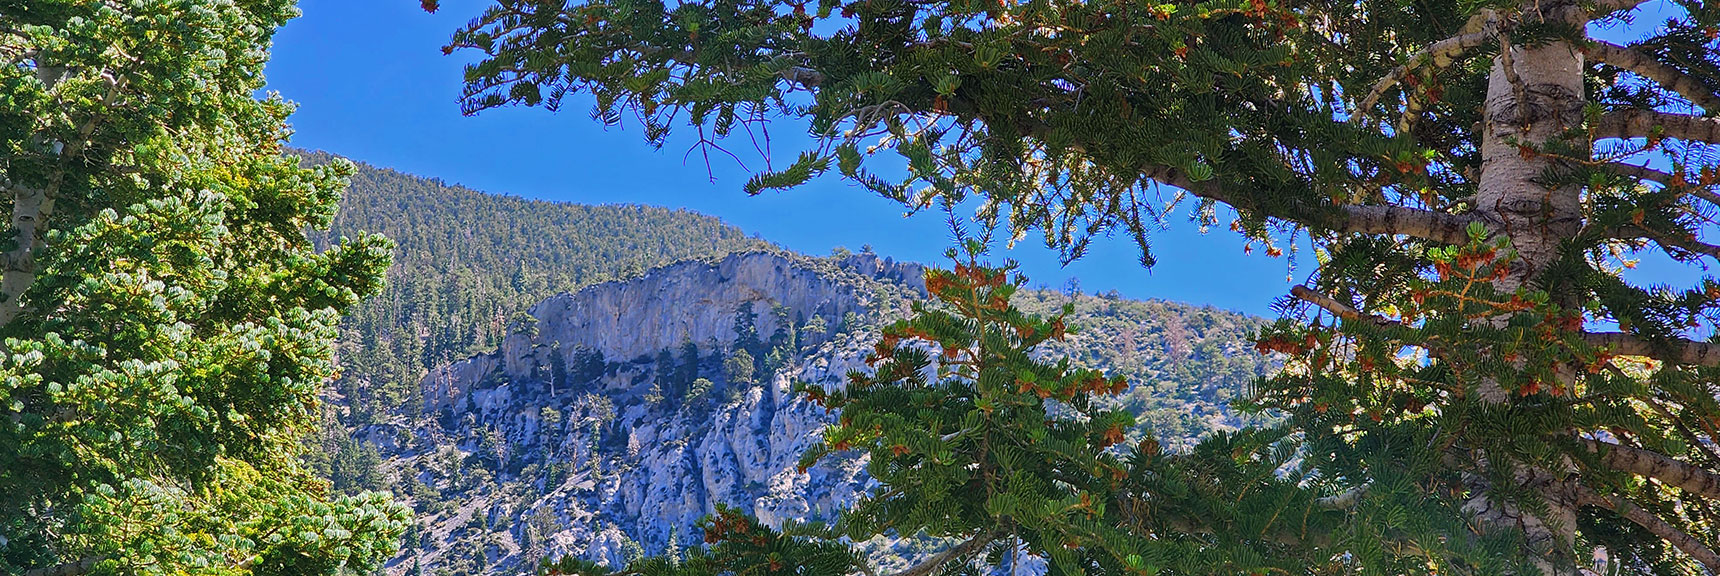 Potential Fletcher Peak Ascent Point Across Canyon | Fletcher Canyon / Fletcher Peak / Cockscomb Ridge Circuit | Mt. Charleston Wilderness | Spring Mountains, Nevada